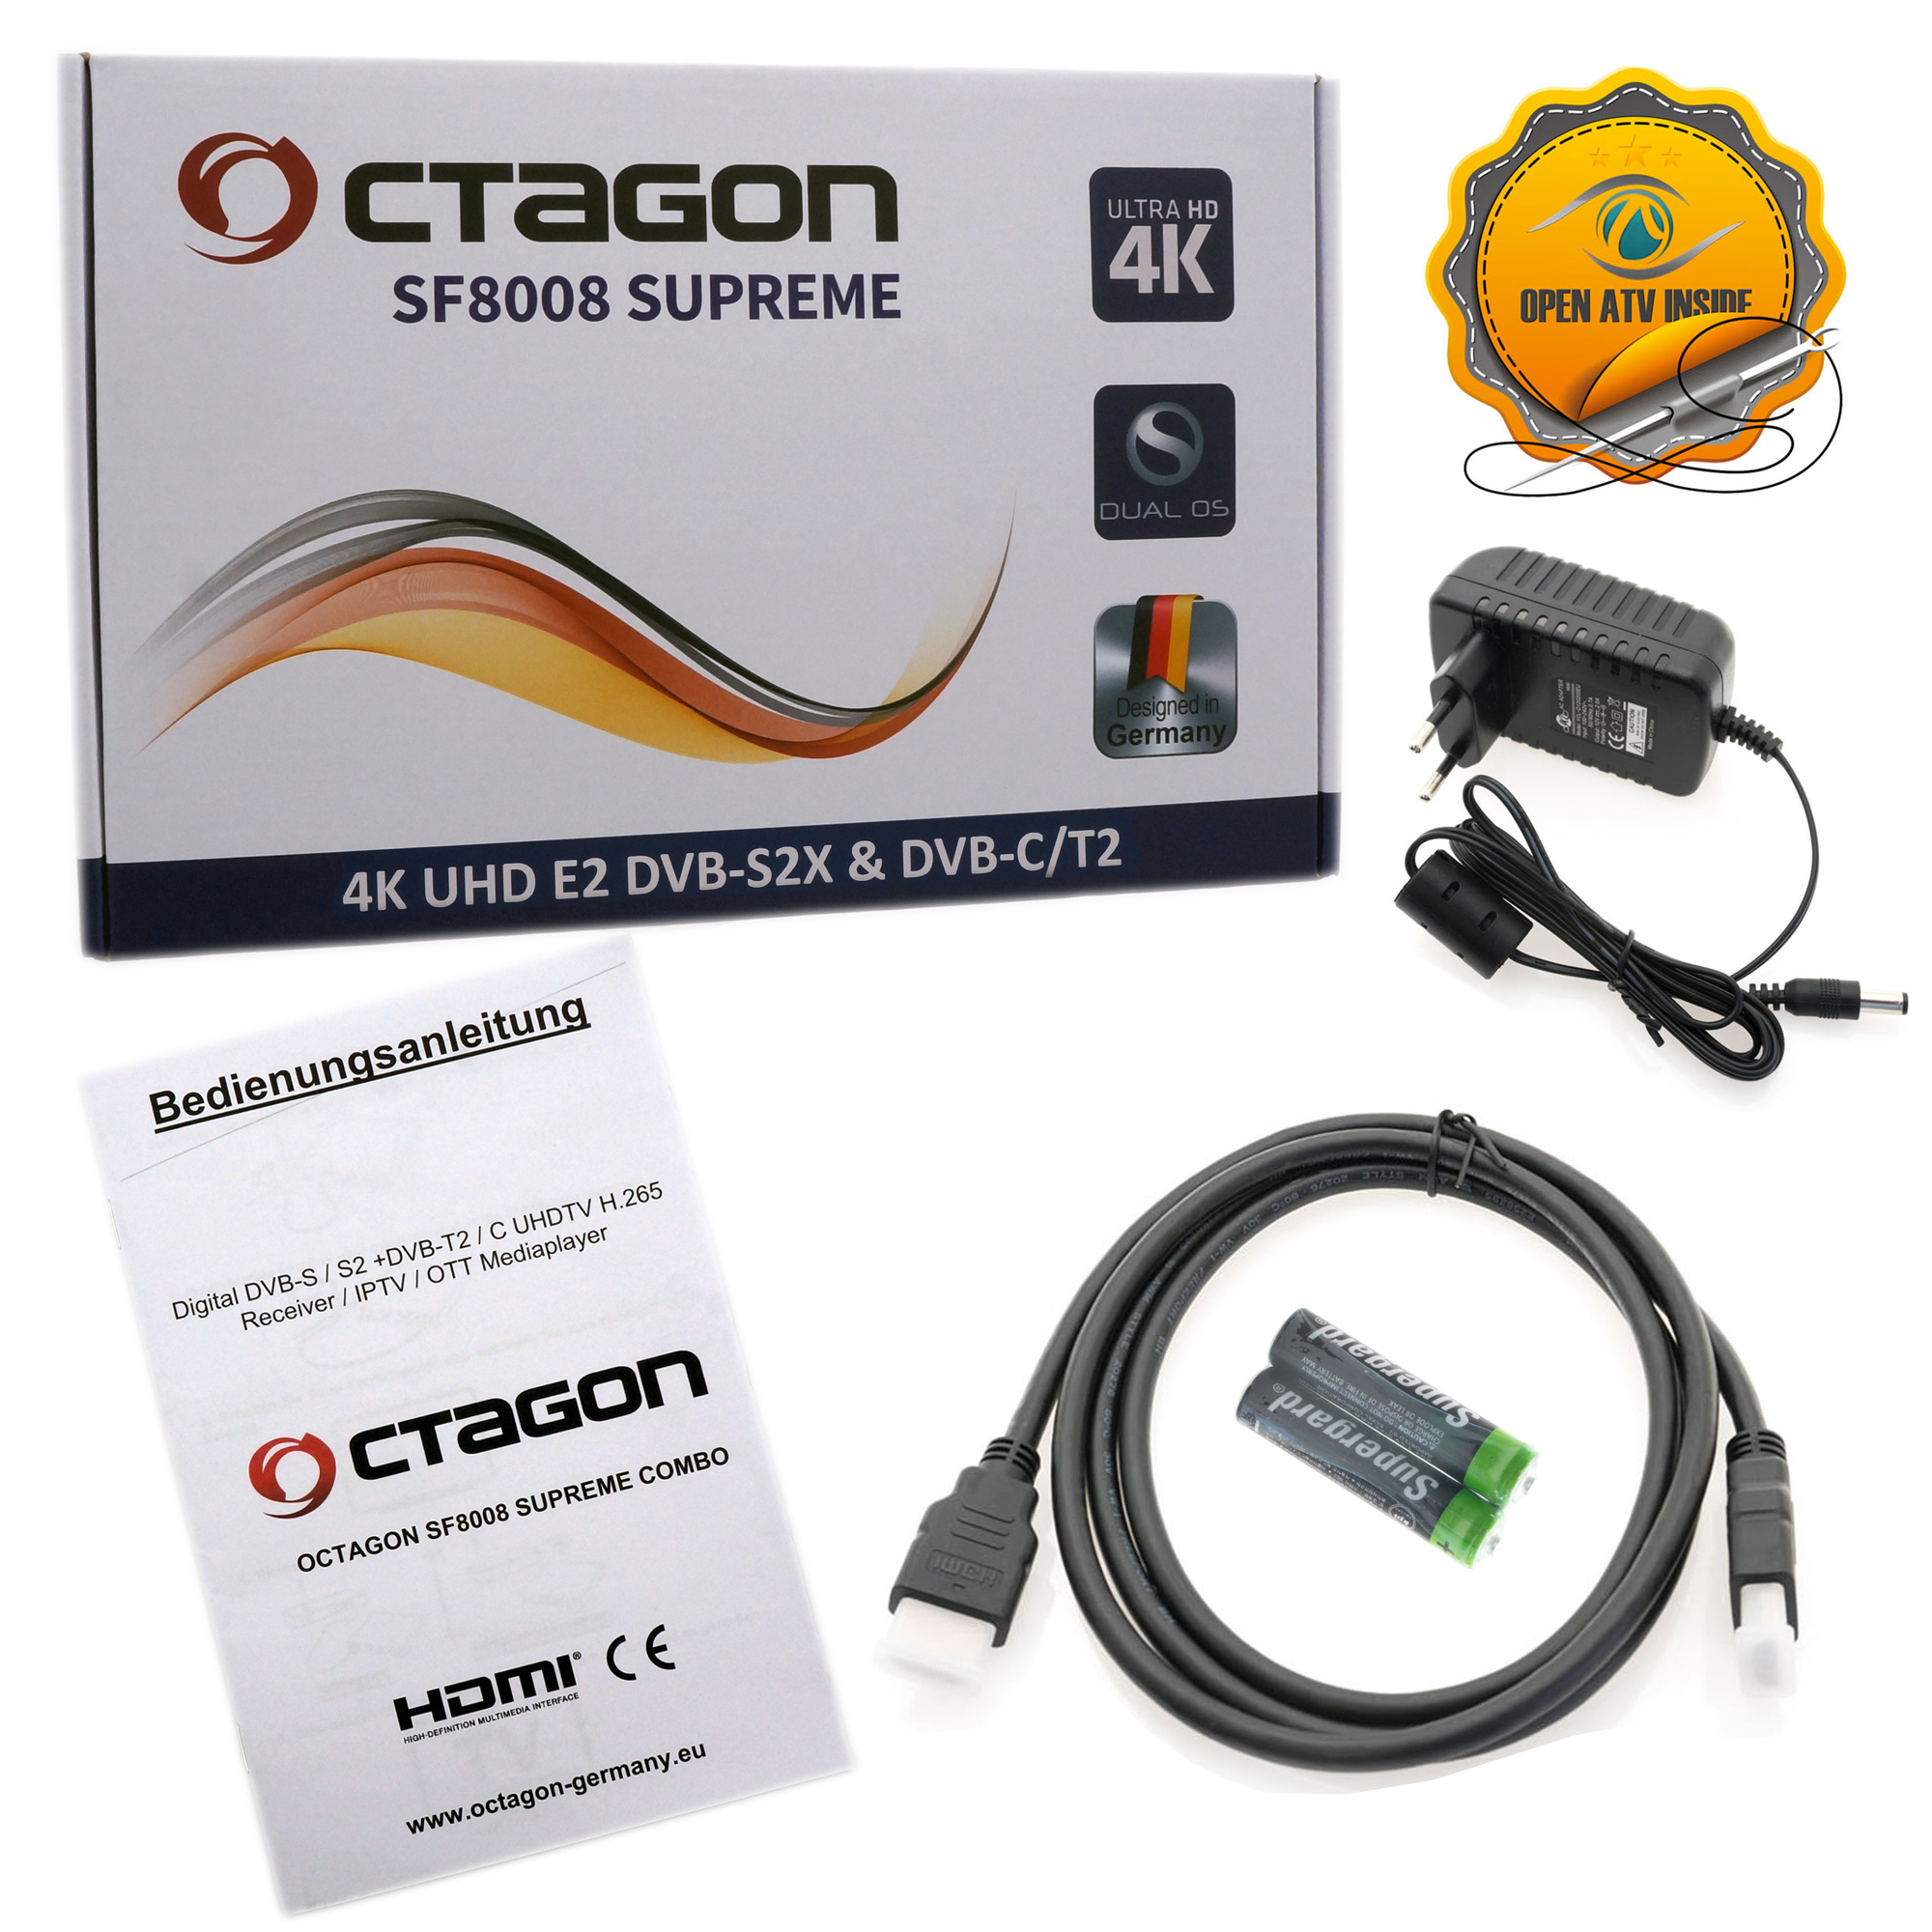 OCTAGON SF8008 4K SUPREME UHD 1TB Combo Sat & DVB-S2X PVR (Twin Schwarz) SSD 4K DVB-C/T2 Tuner, Receiver M.2 E2 Receiver + UHD